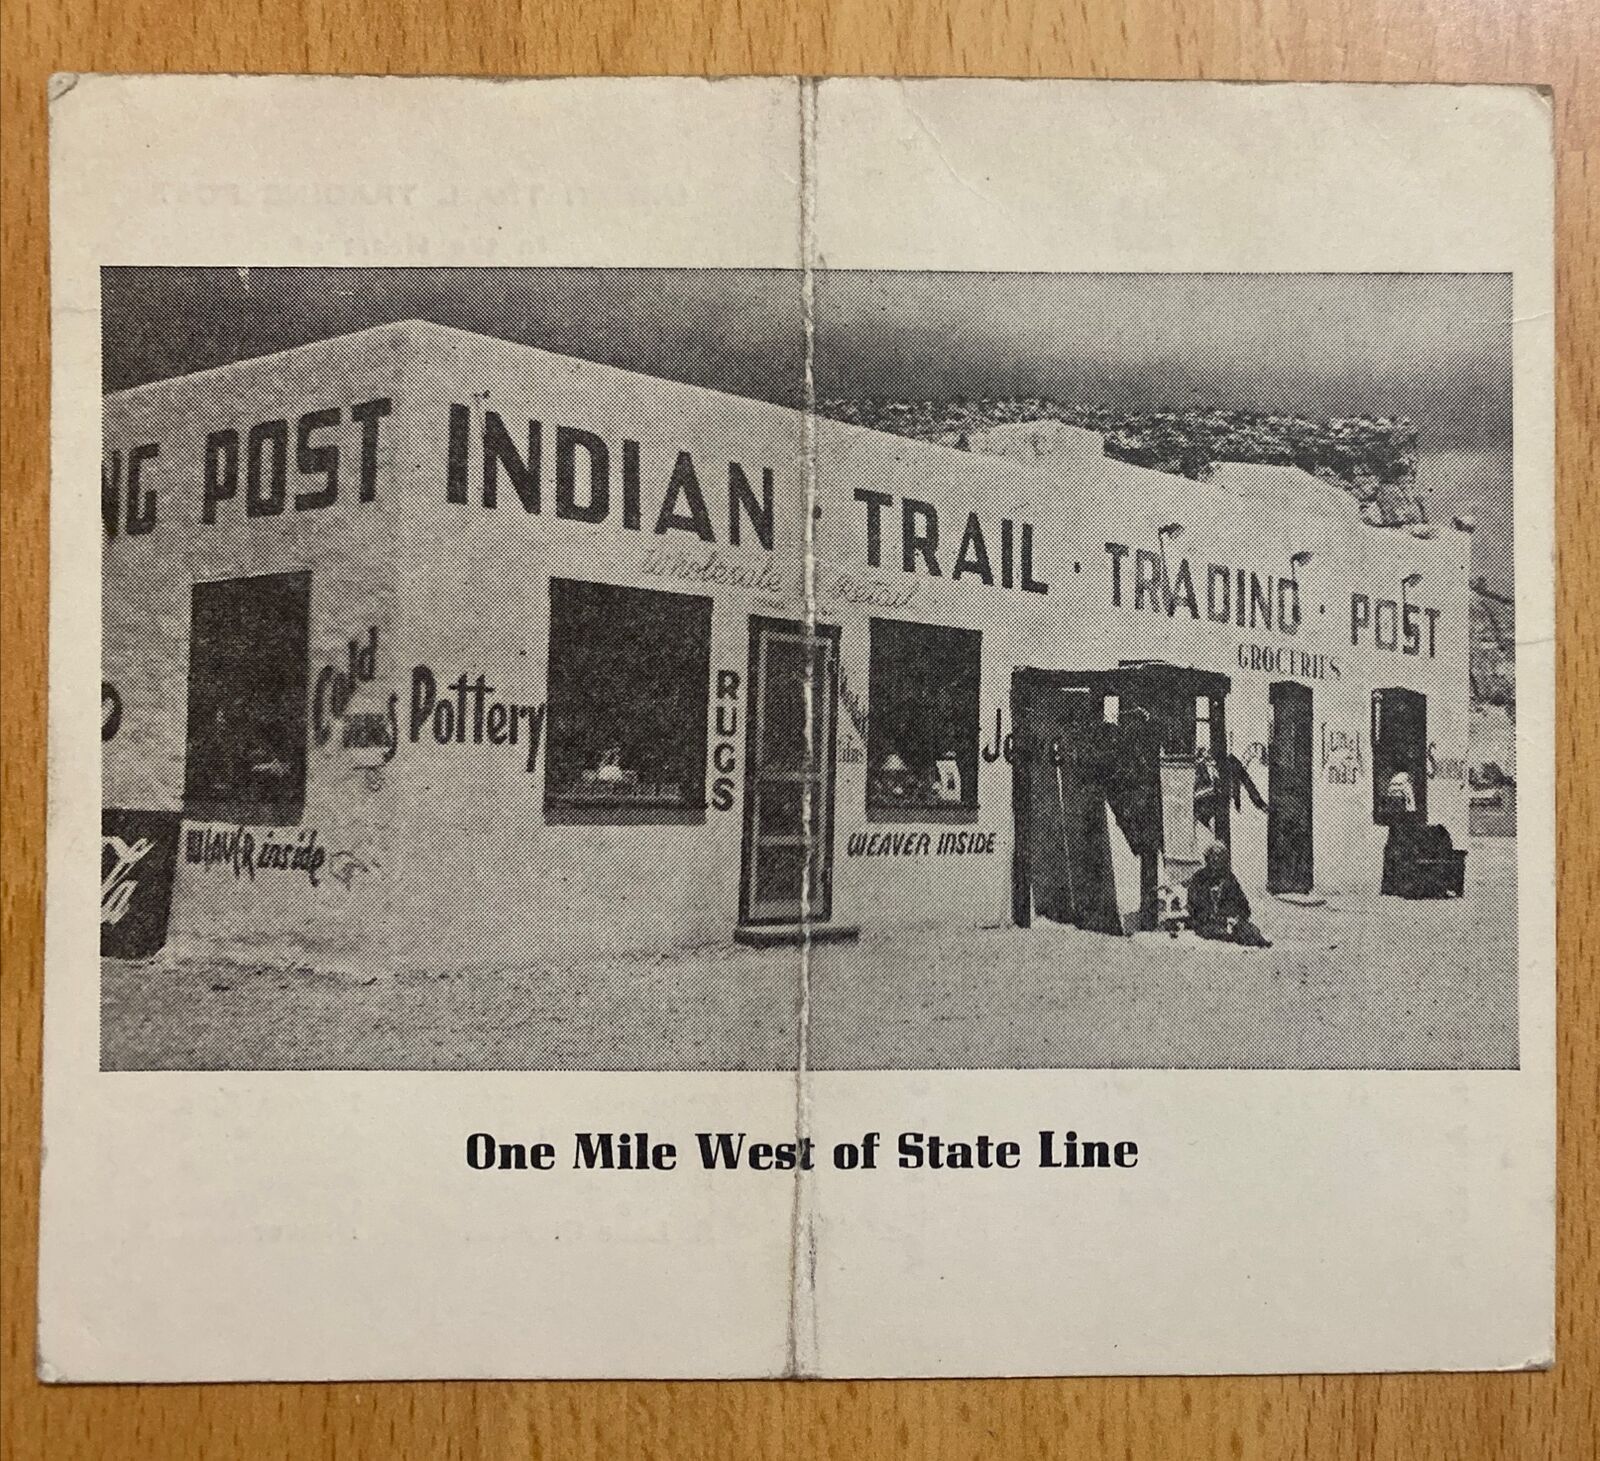 Vintage Route 66 Business Card Indian Trail Trading Post Ortega Lupton Arizona